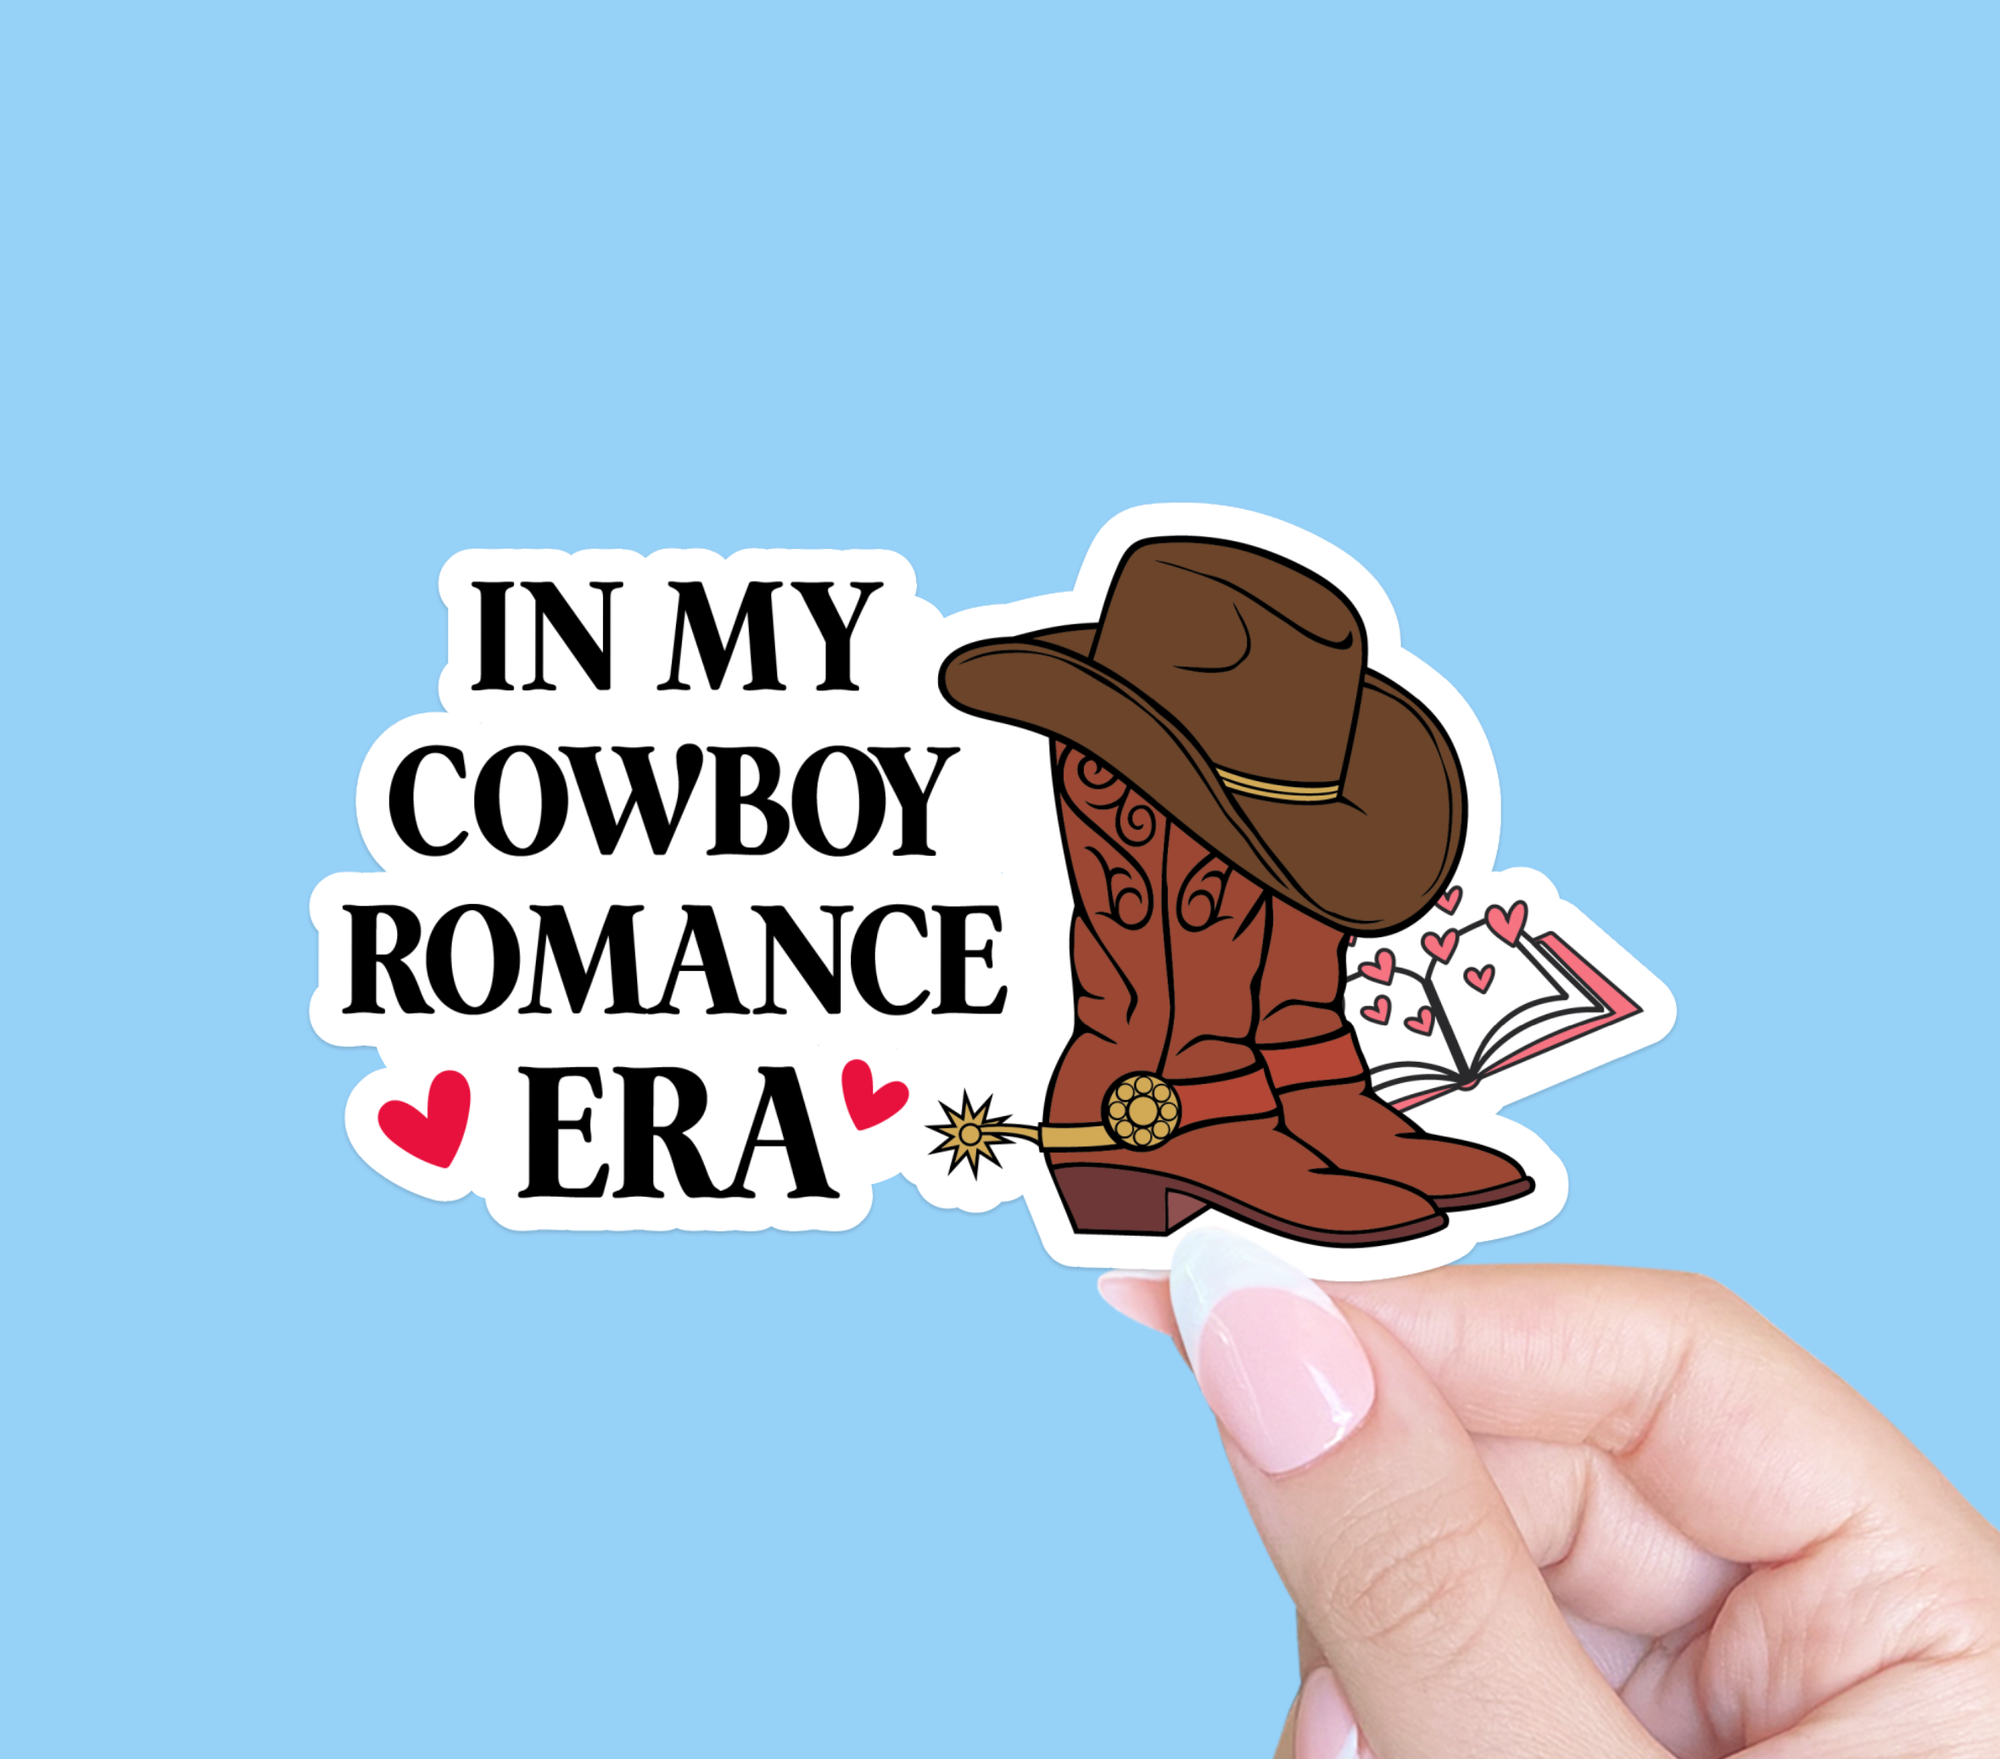 In my cowboy romance era